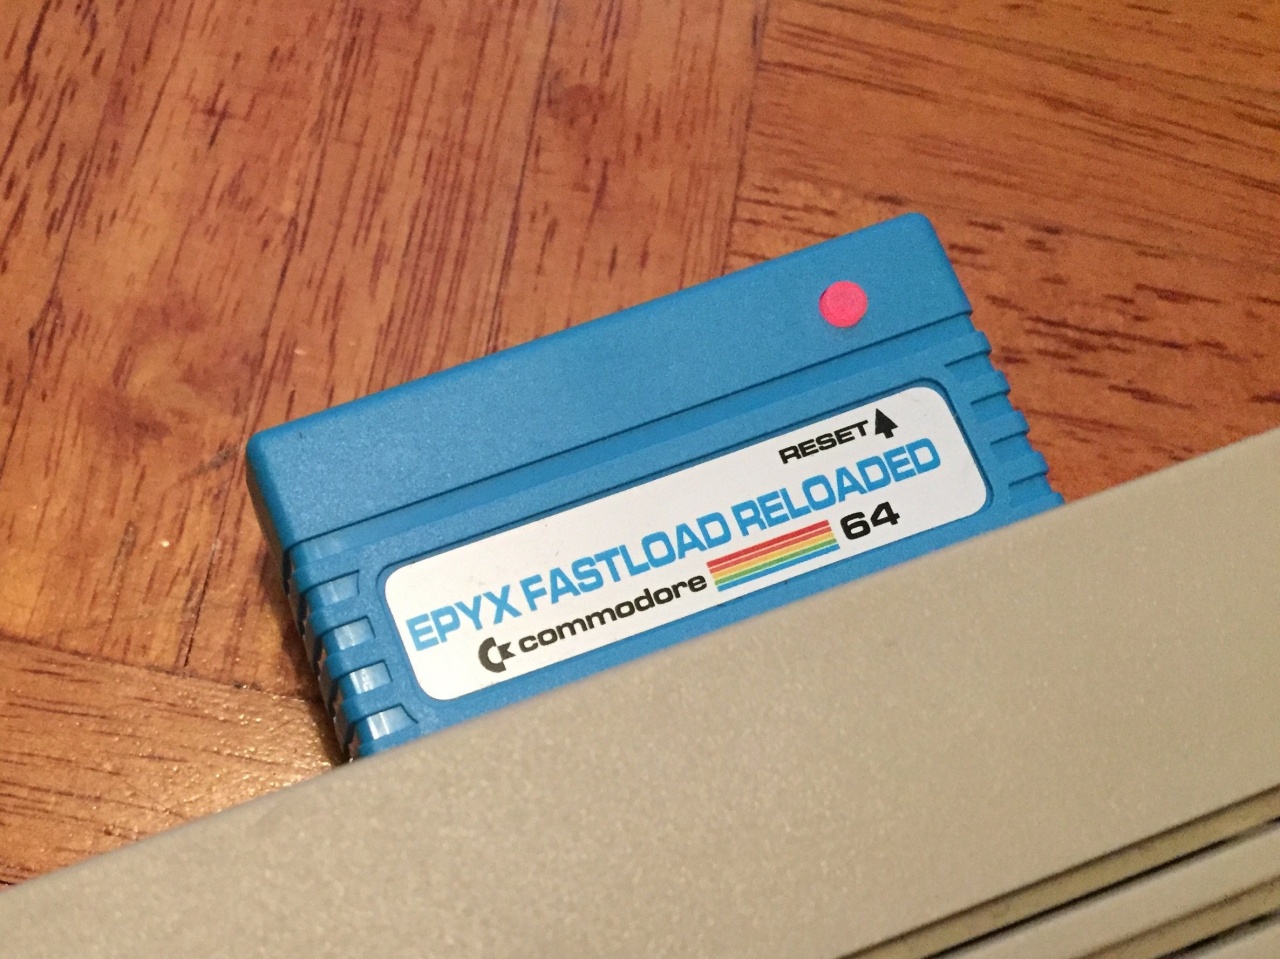 TFW8b Epyx Fastload Reloaded C64 - BLUE